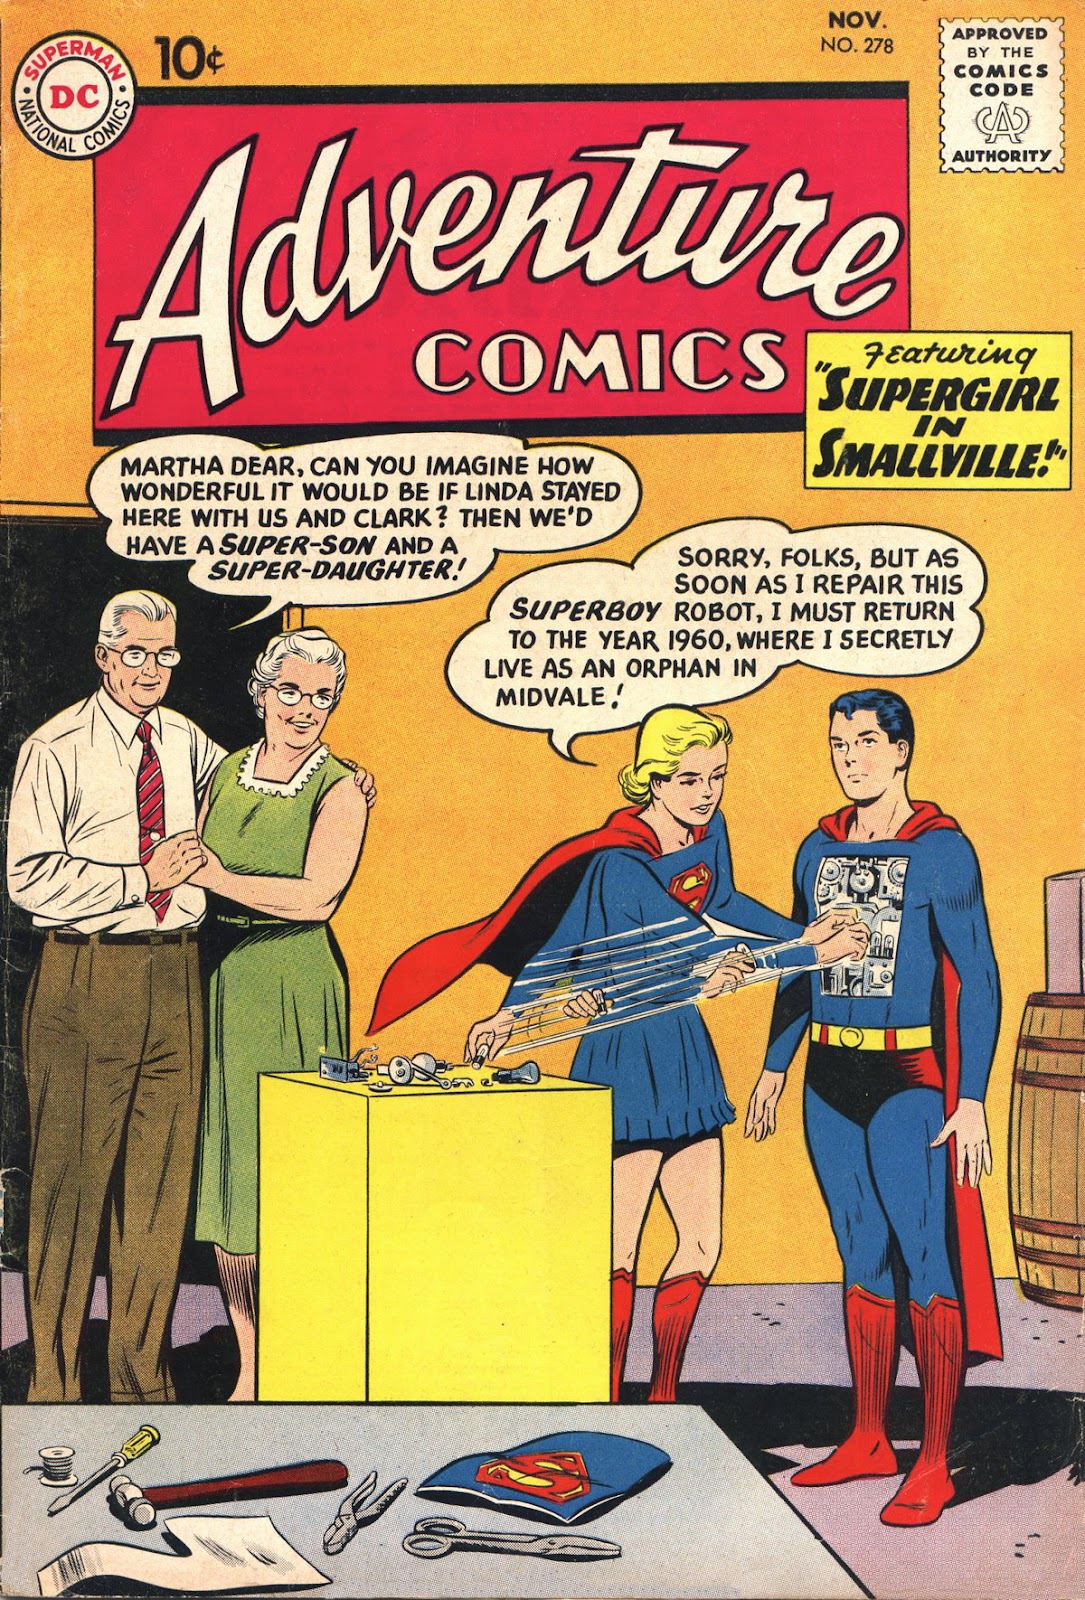 Days Of Adventure Adventure Comics 278 November 1960